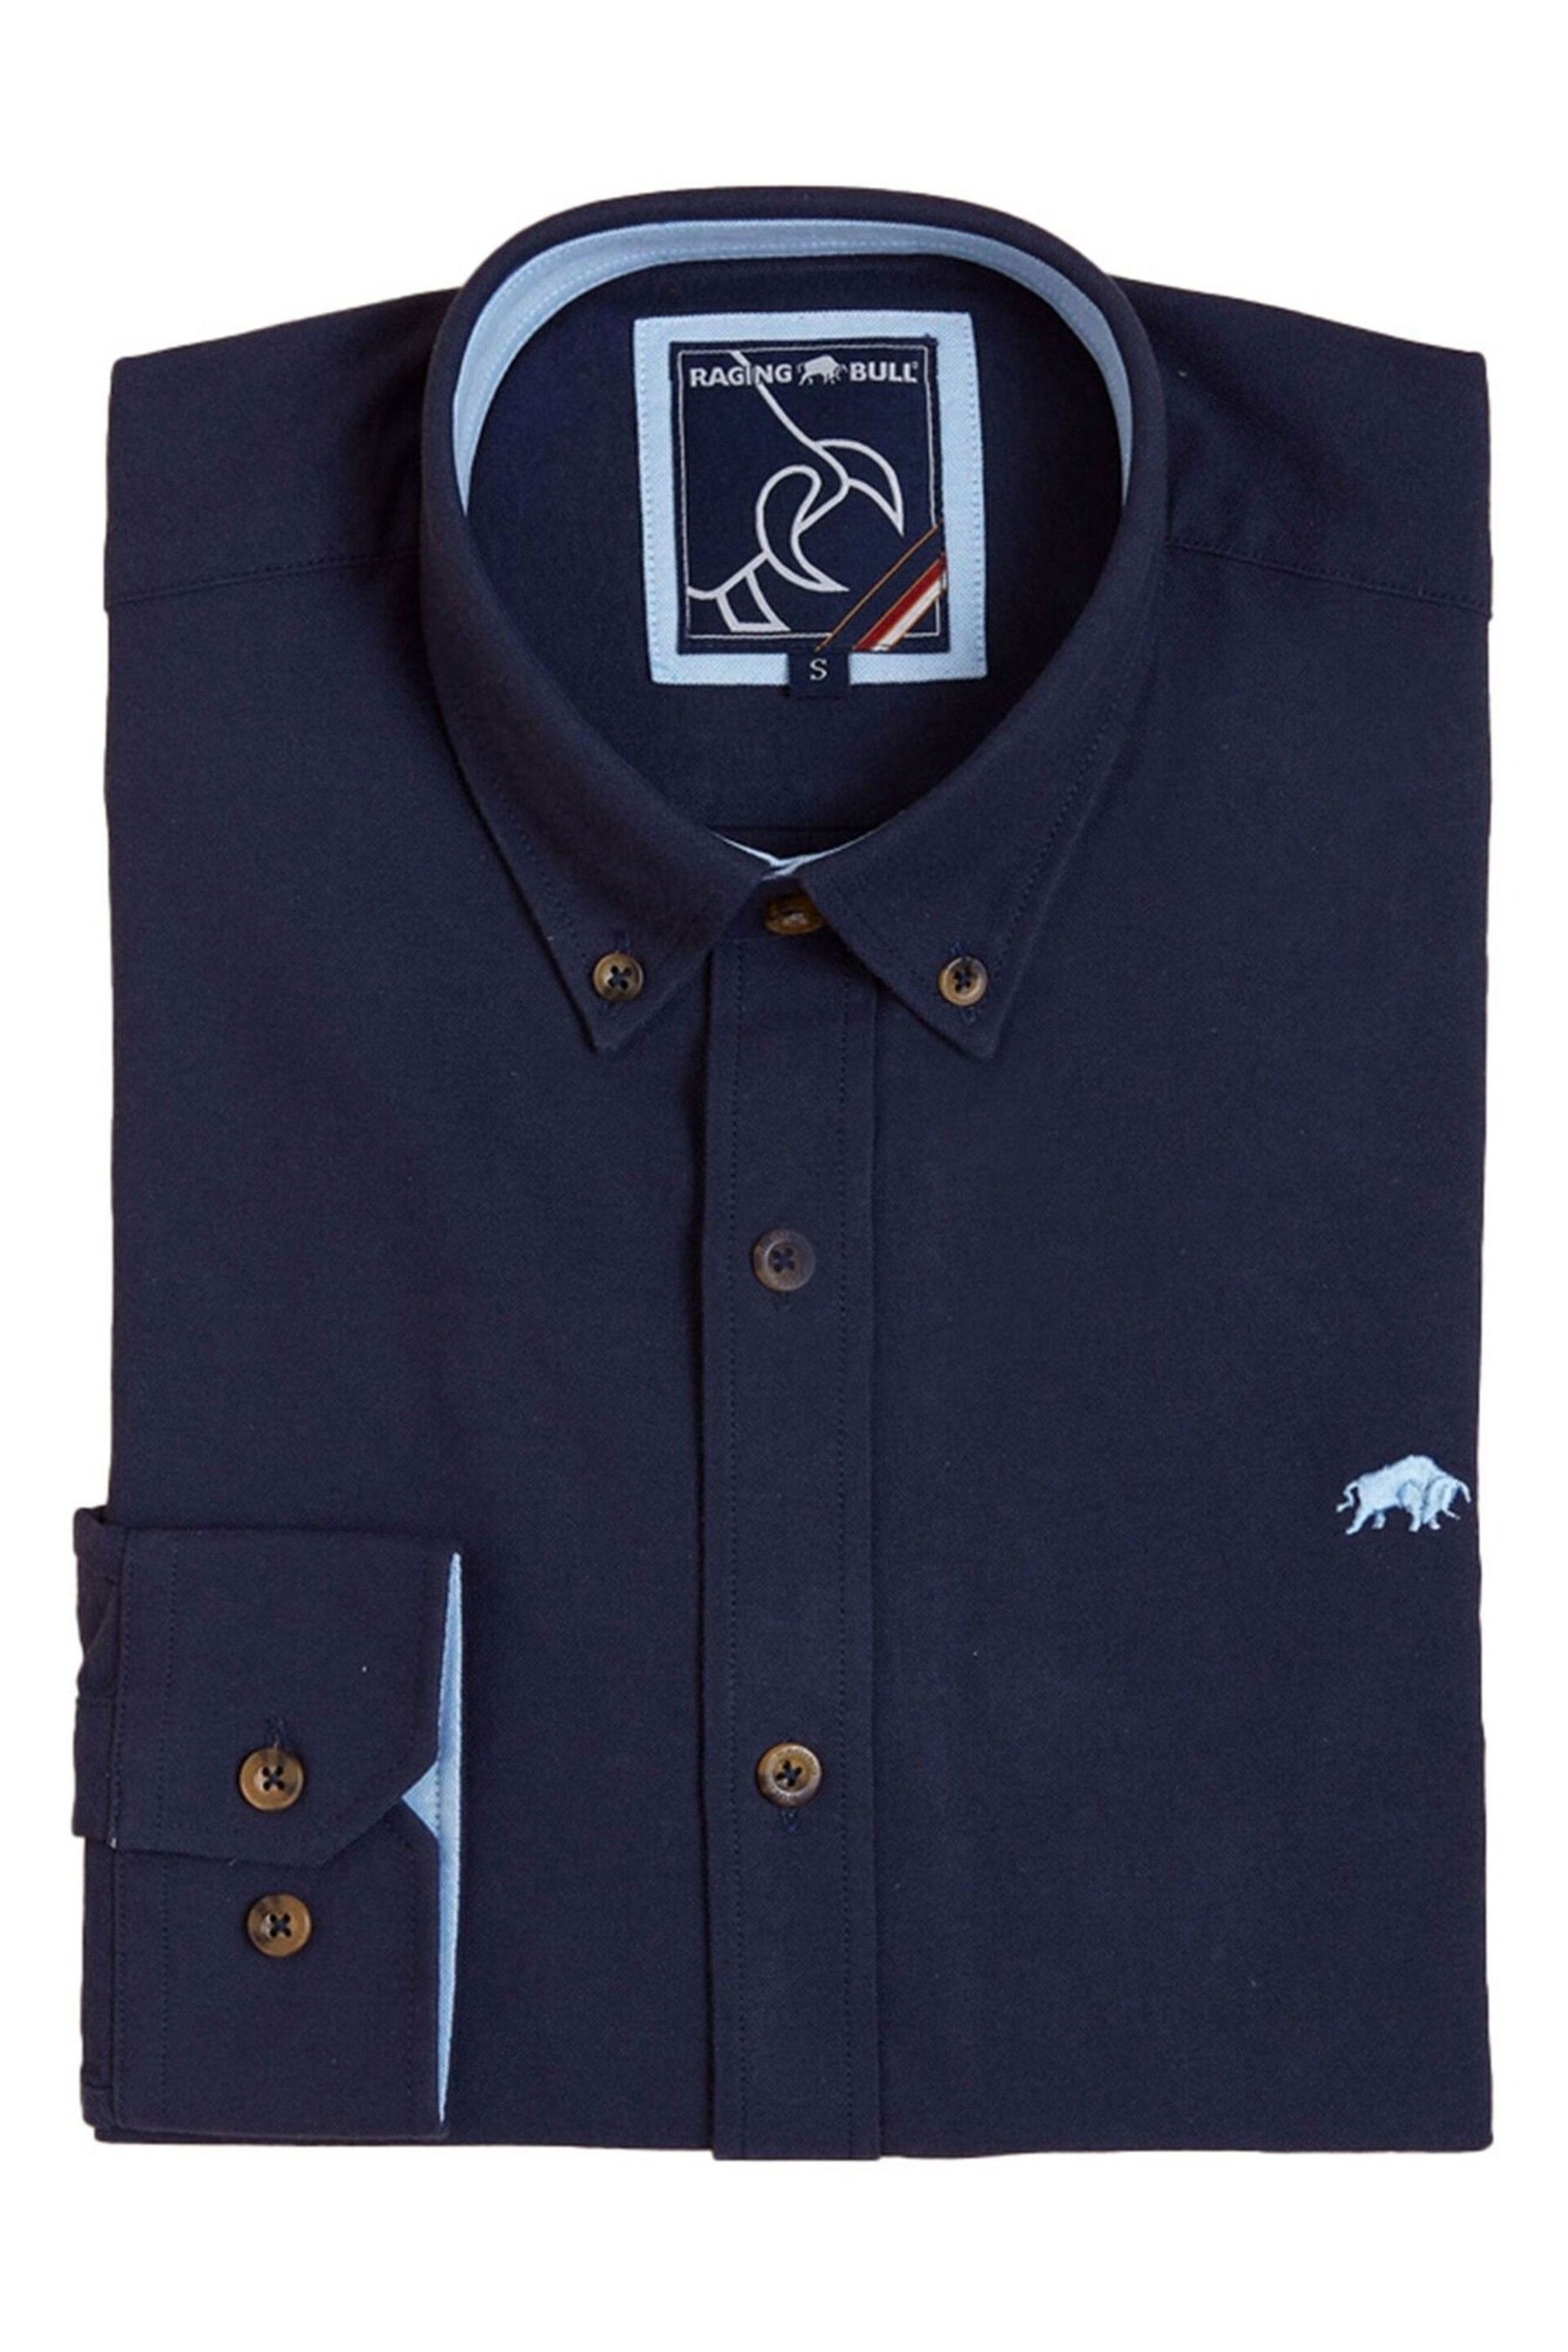 Raging Bull Blue Classic Long Sleeve Oxford Shirt - Image 5 of 6